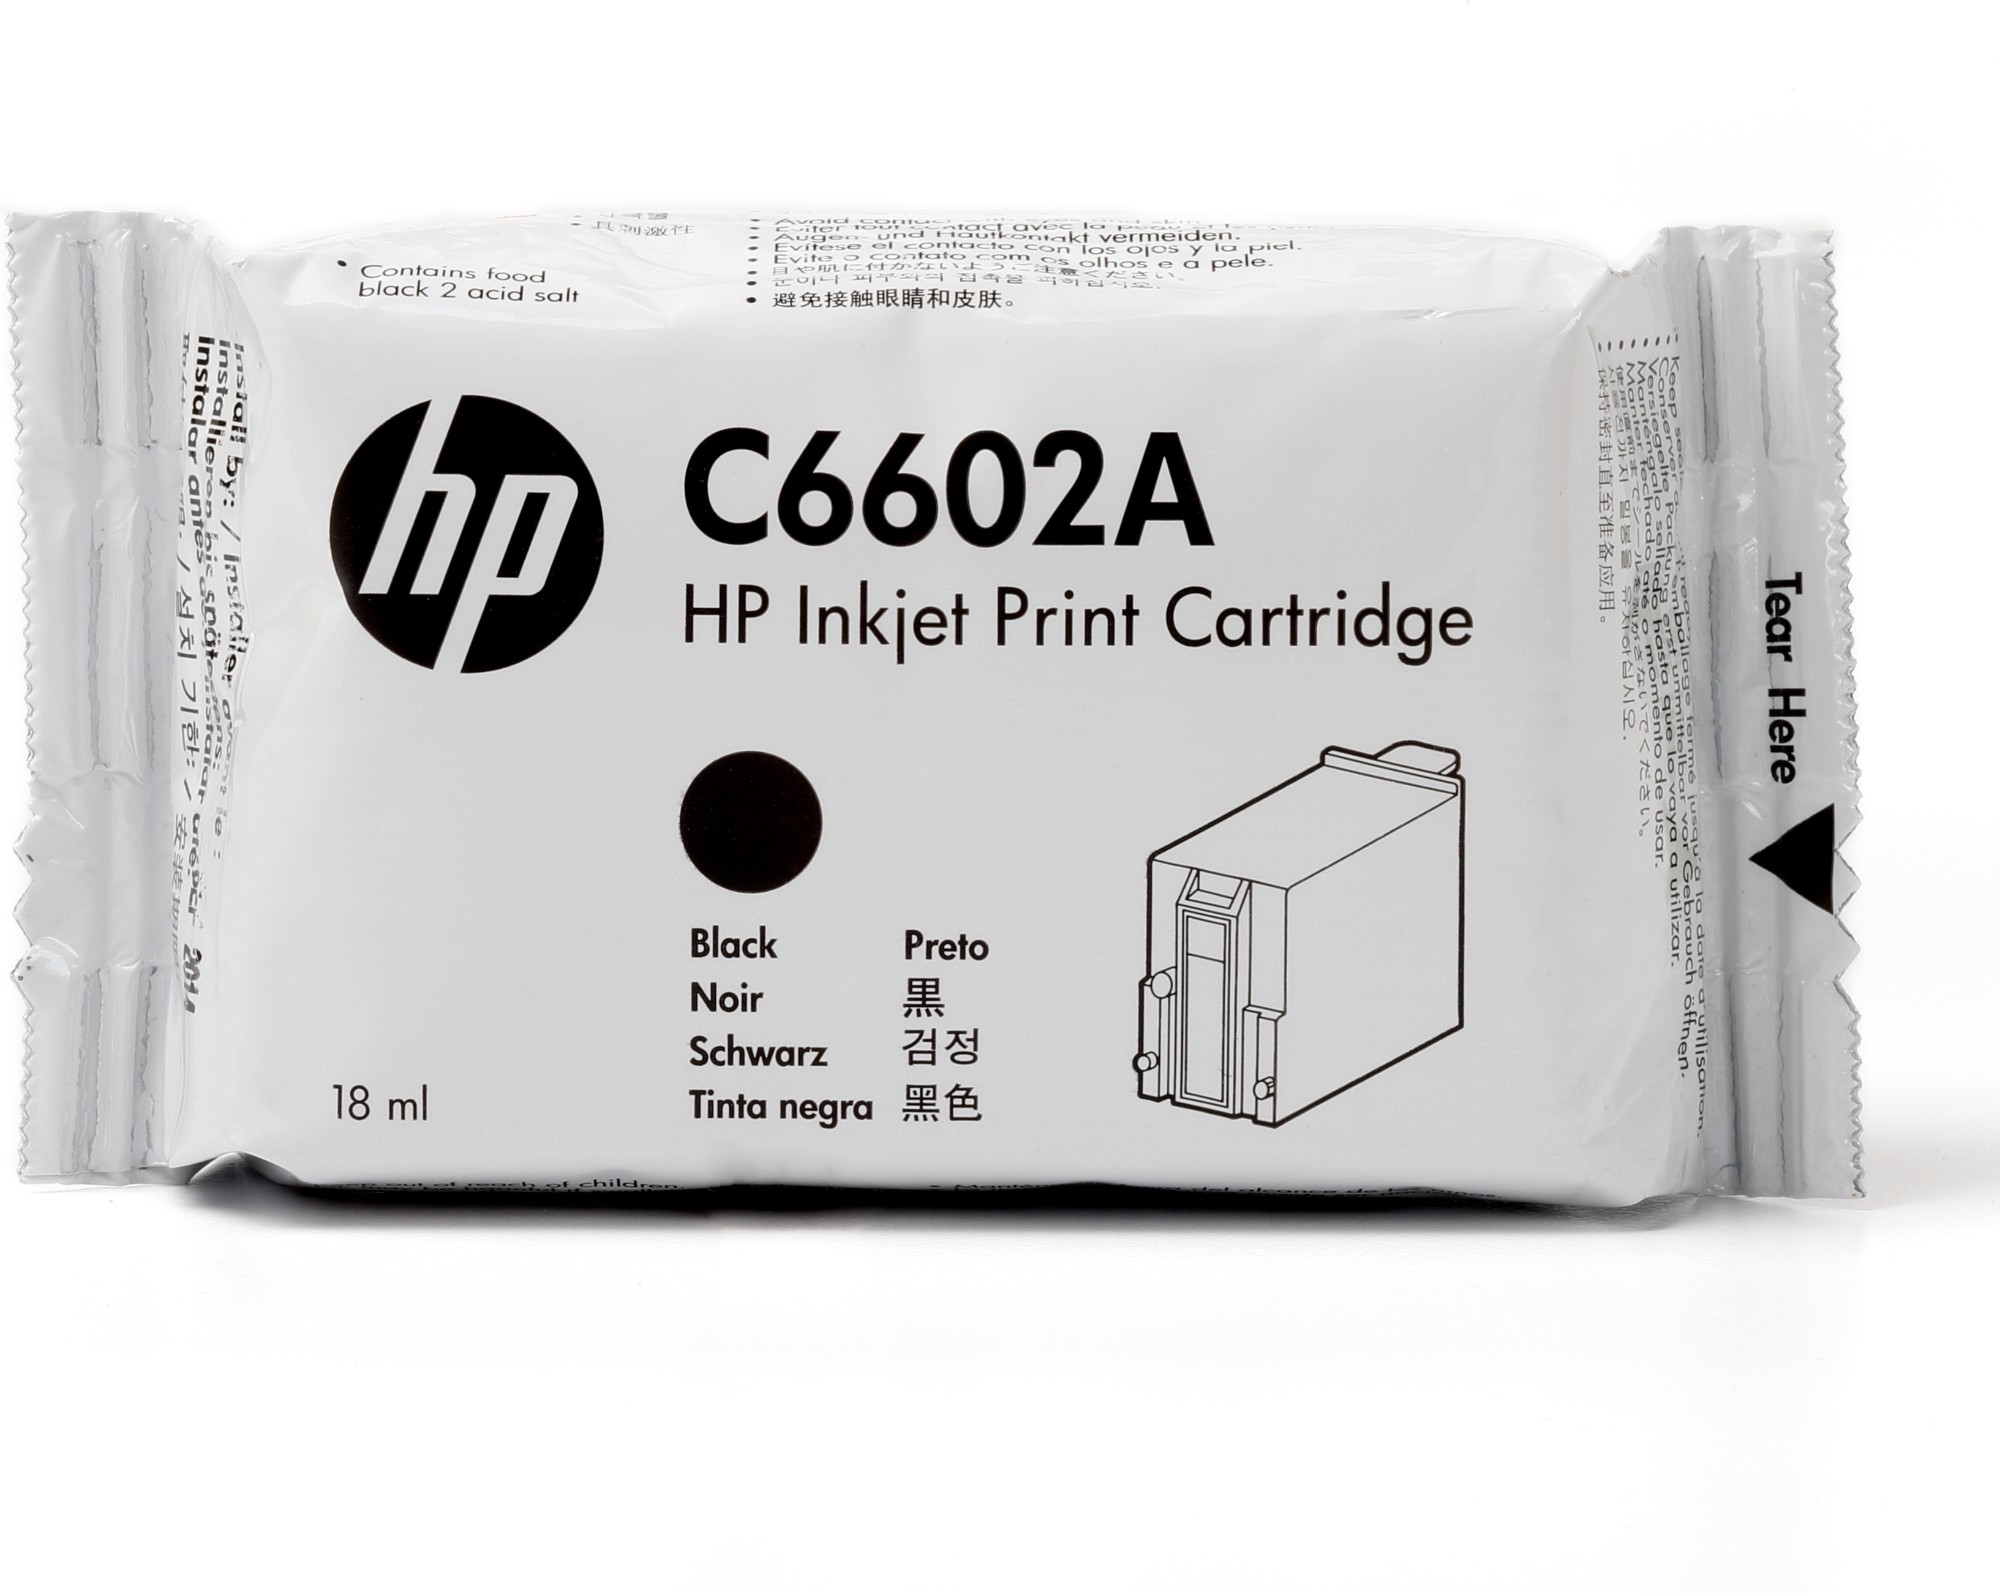 Photos - Ink & Toner Cartridge HP C6602A Printhead cartridge black 18ml for  Addmaster IJ 6000 